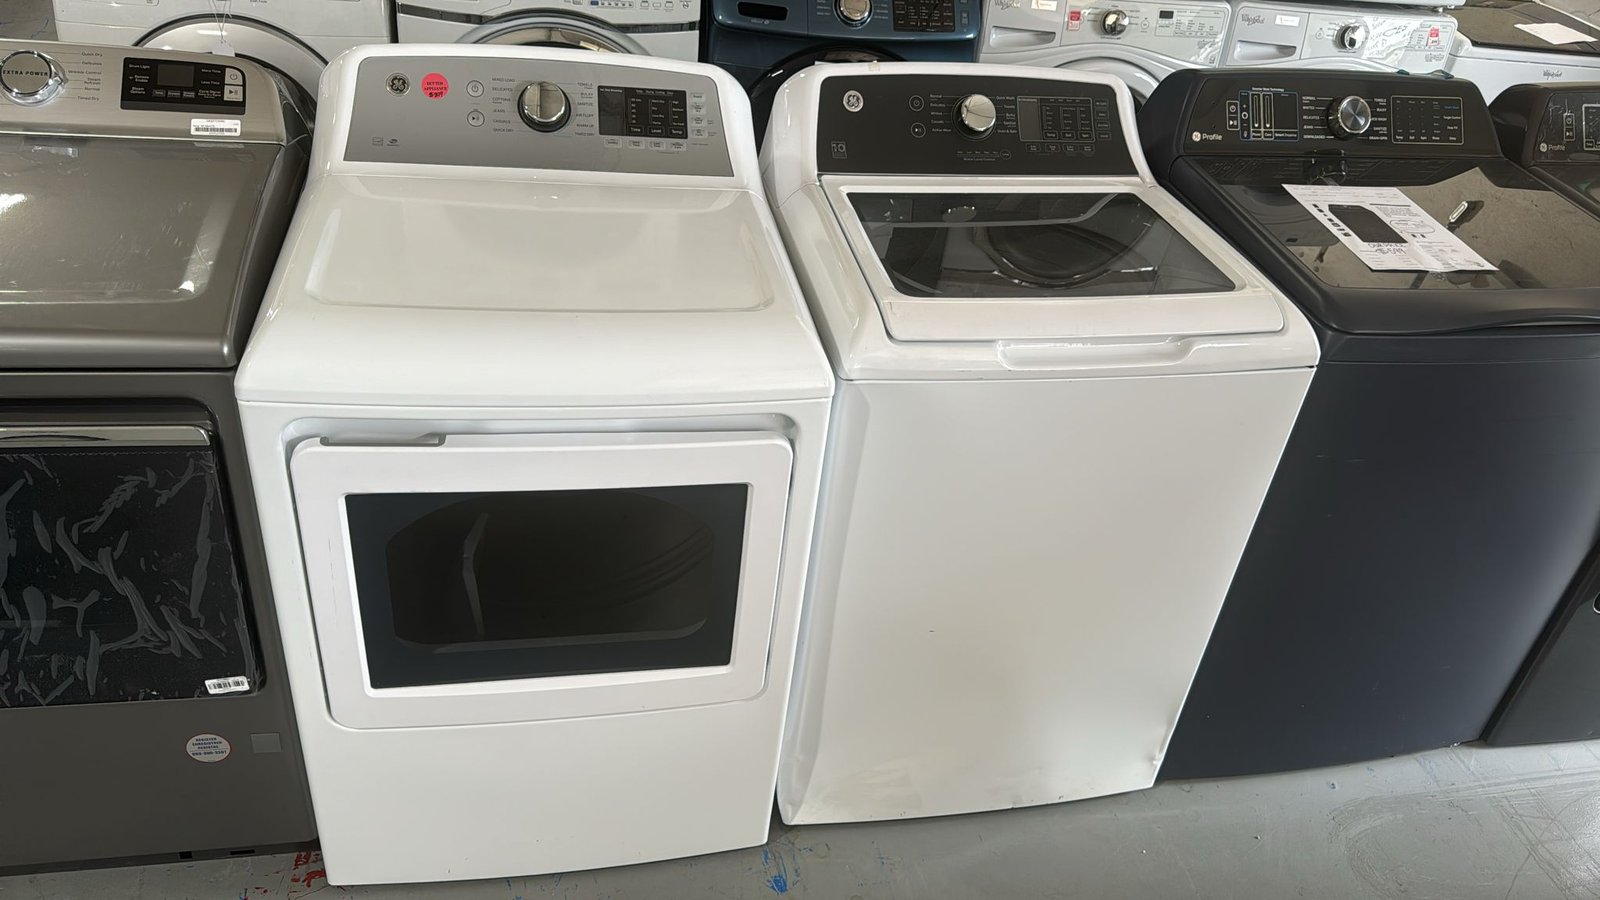 GE Used Washer Dryer Set